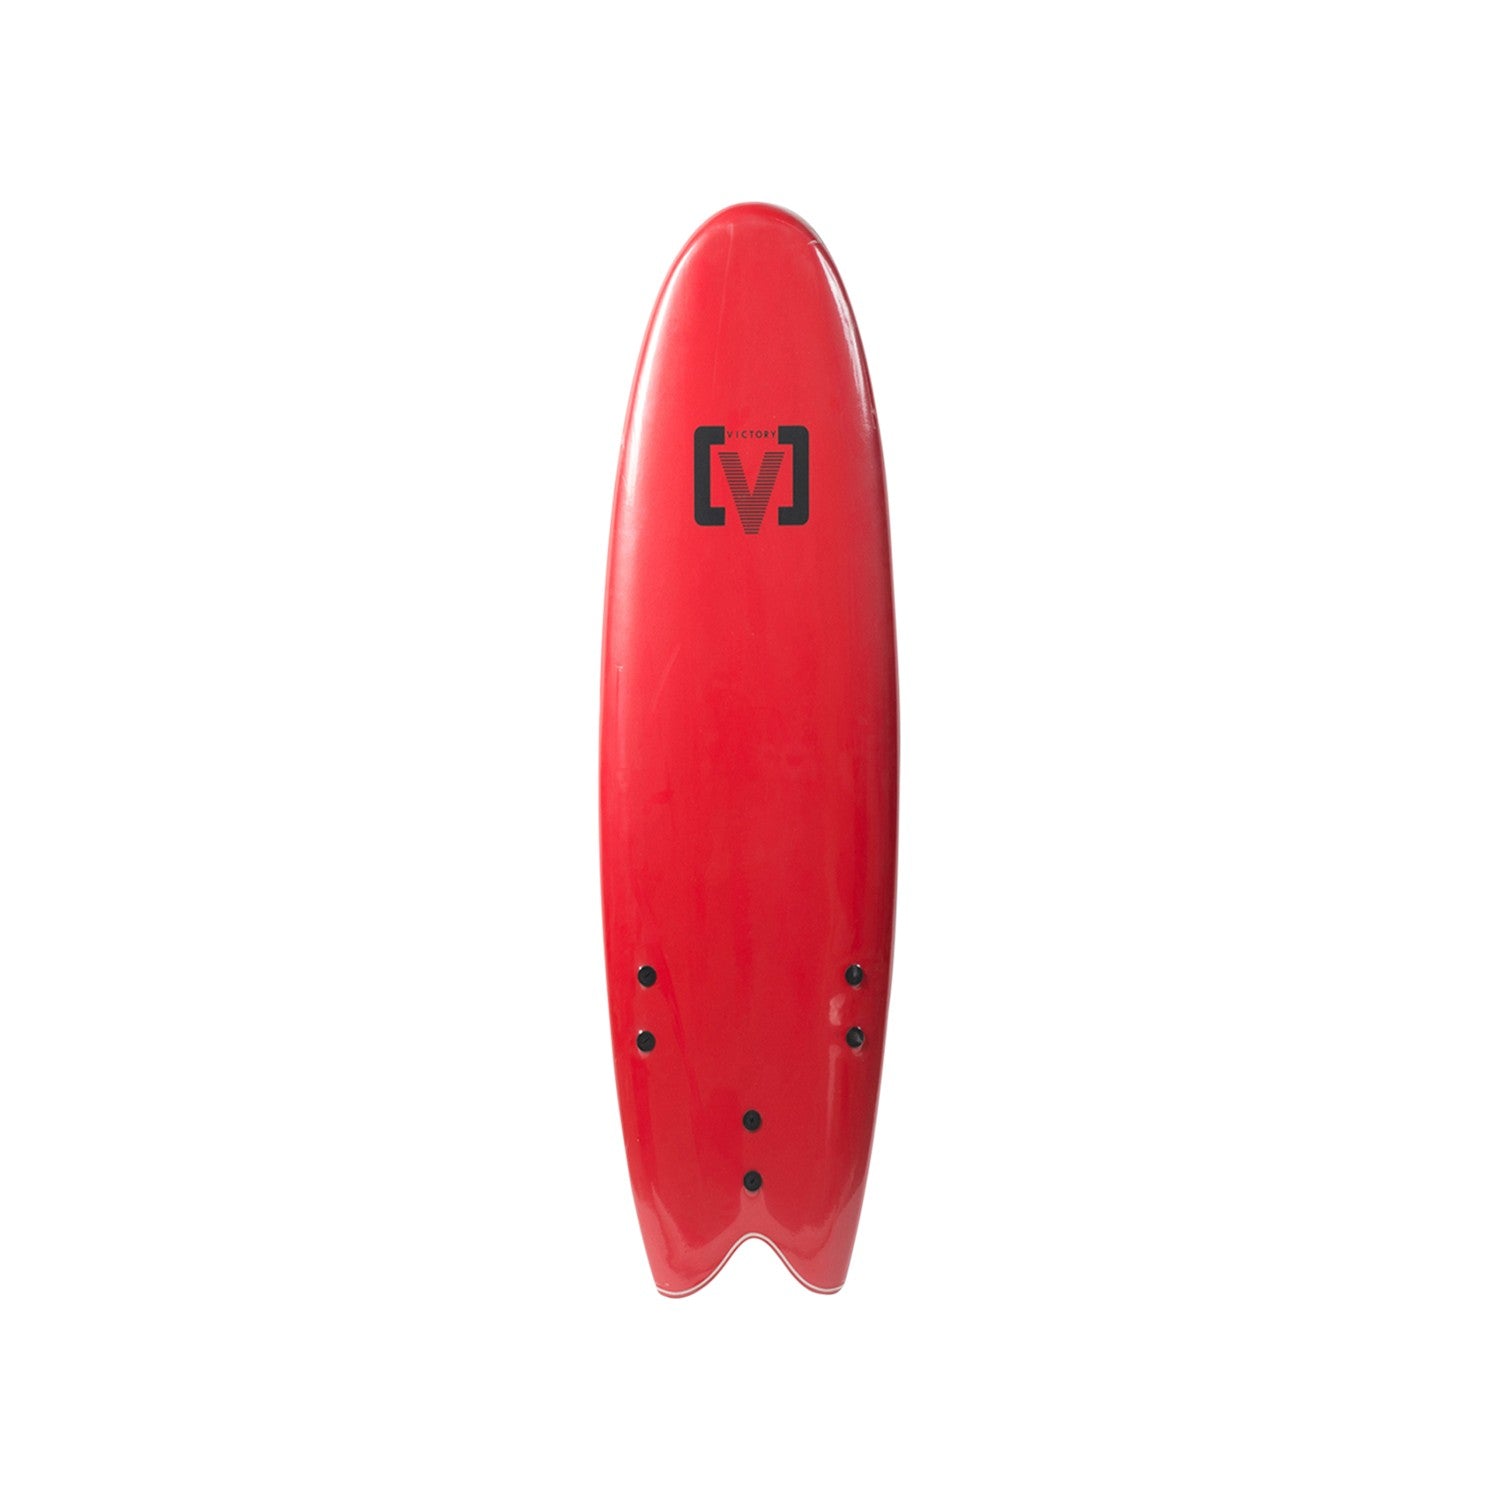 VICTORY - EPS Softboard - Foam Surfboard - Fish 6'6 - Red